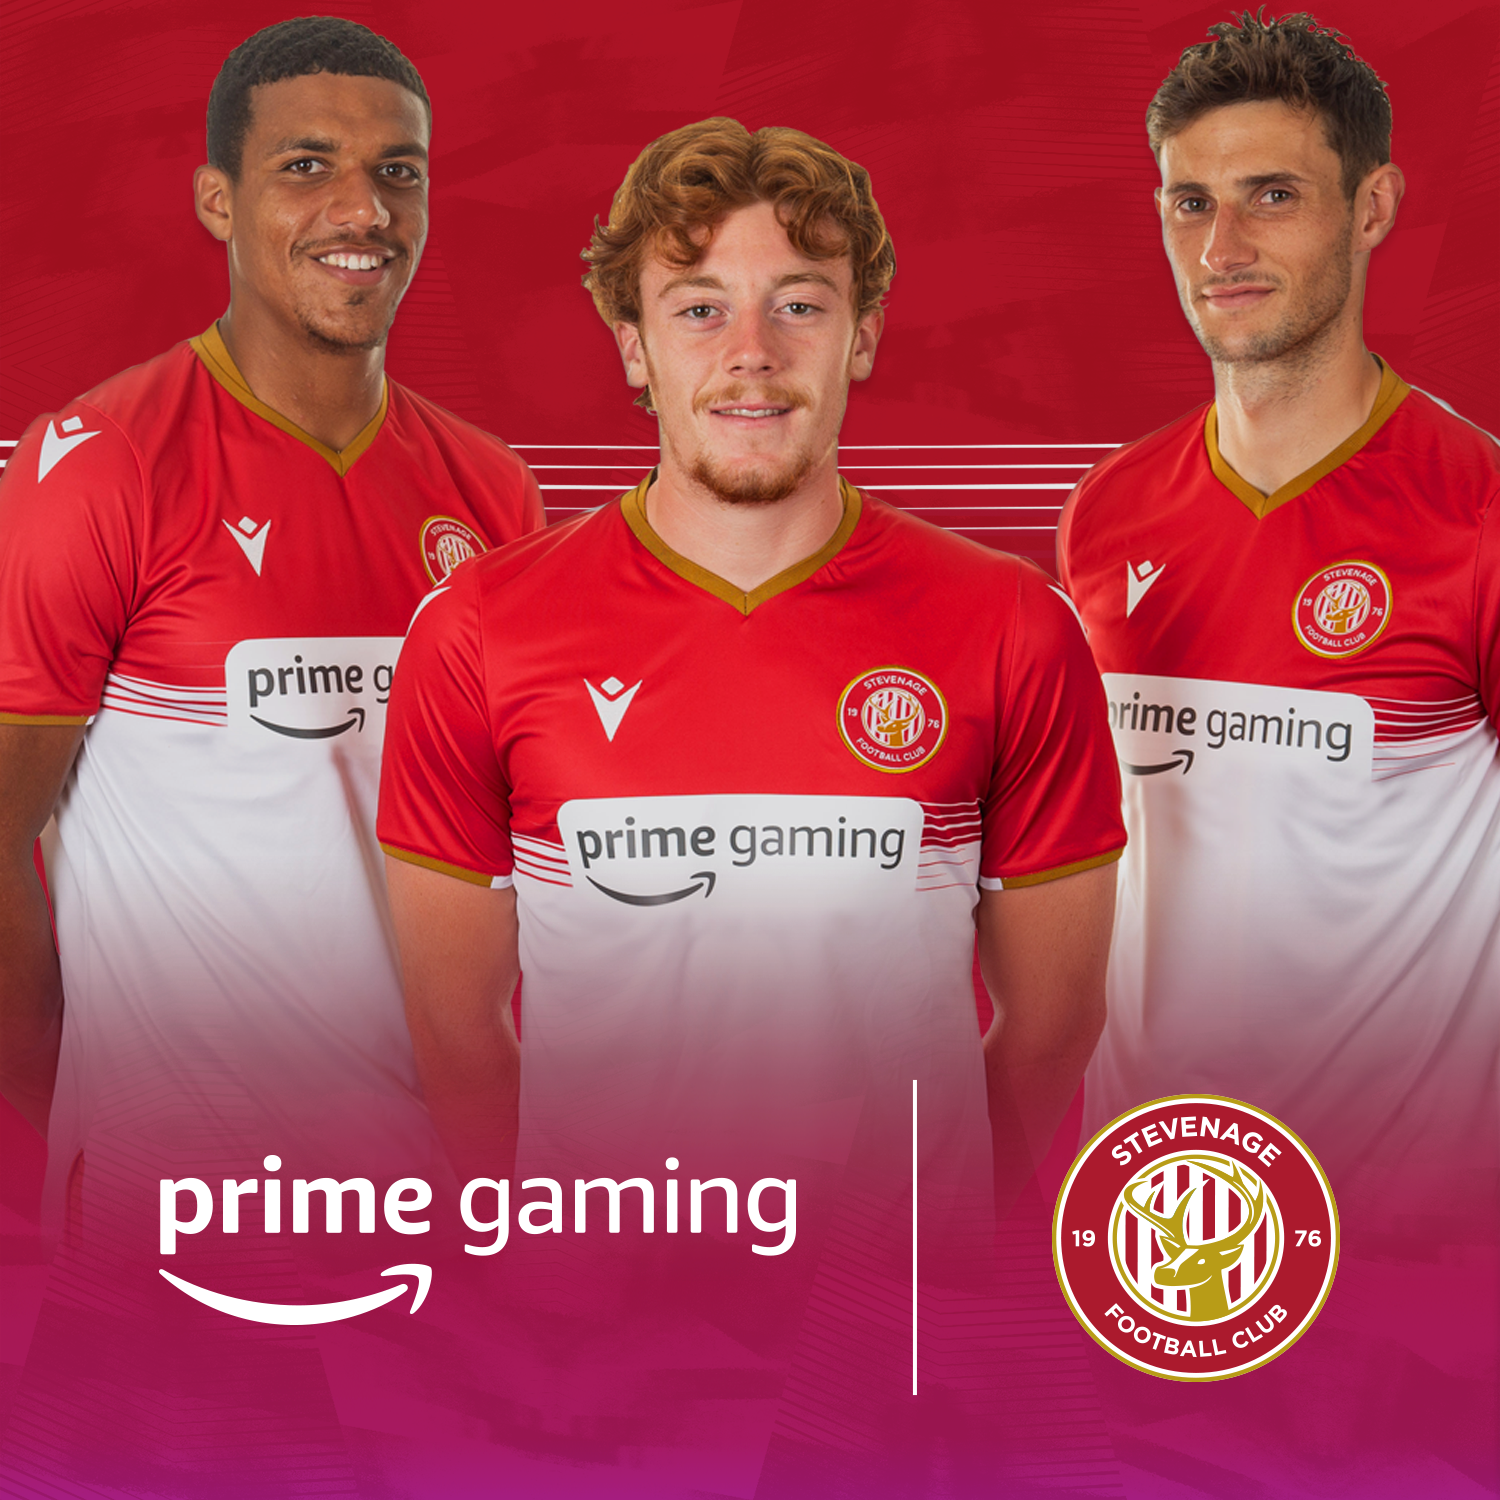 Amazon Prime Gaming signs shirt sponsorship deal with… Stevenage FC Eurogamer